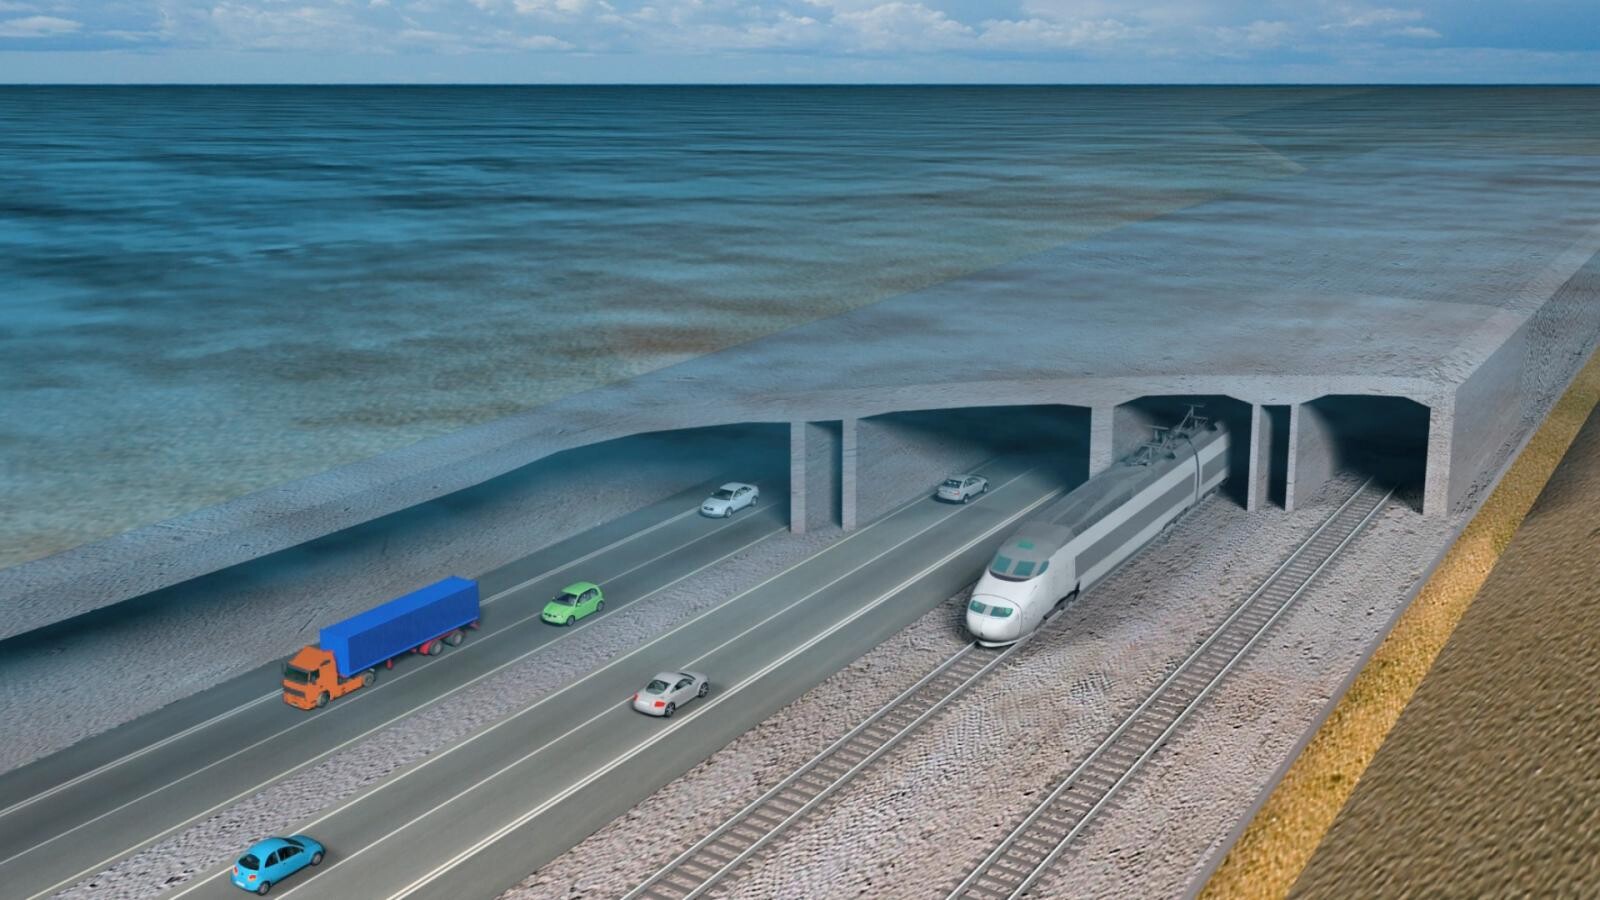 More information about "Fehmarnbelt Tunnel: Ετοιμάζεται η μεγαλύτερη υποθαλάσσια σήραγγα αυτοκινήτων στον κόσμο ανάμεσα σε Δανία και Γερμανία"